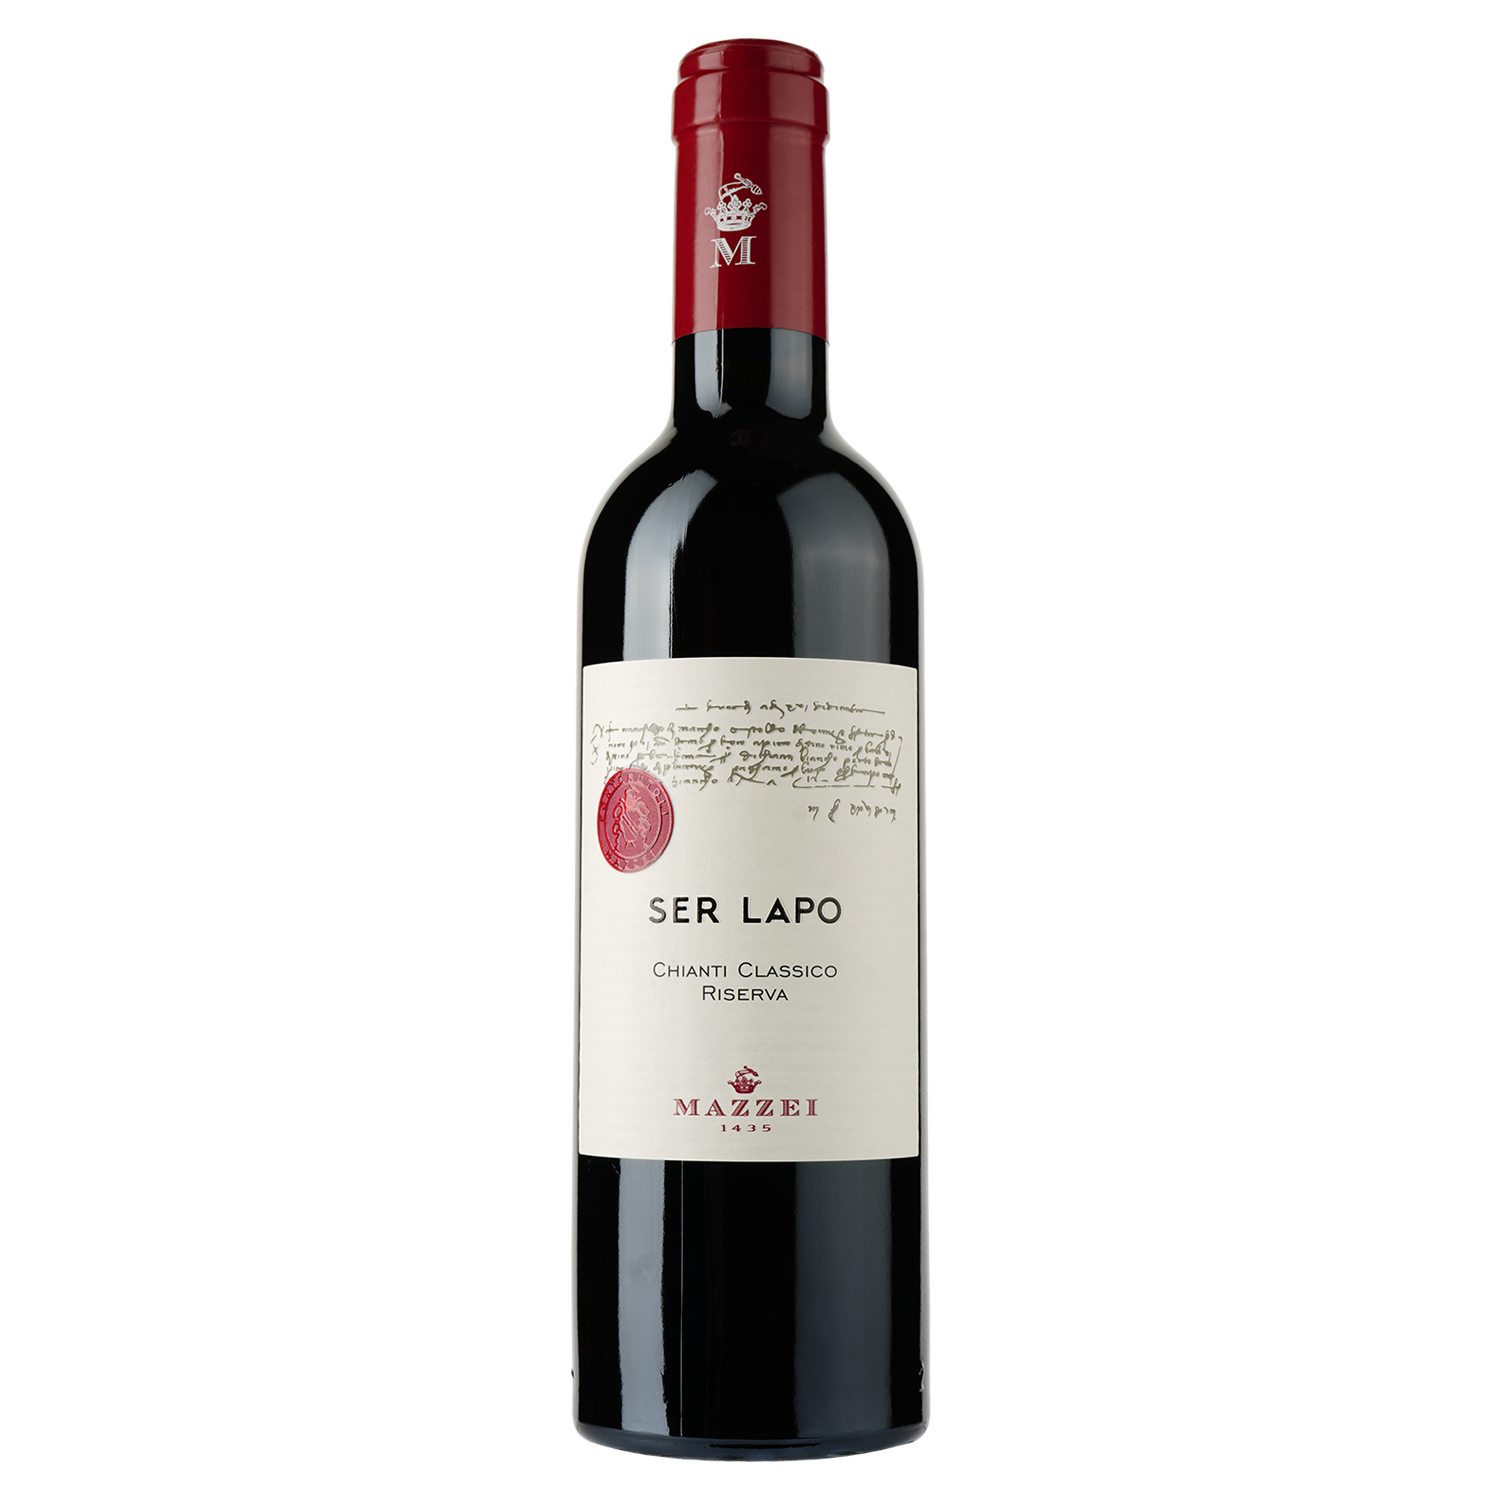 Вино Marchesi Mazzei Ser Lapo Chianti Classico Riserva DOCG, червоне, сухе, 0,375 л - фото 1